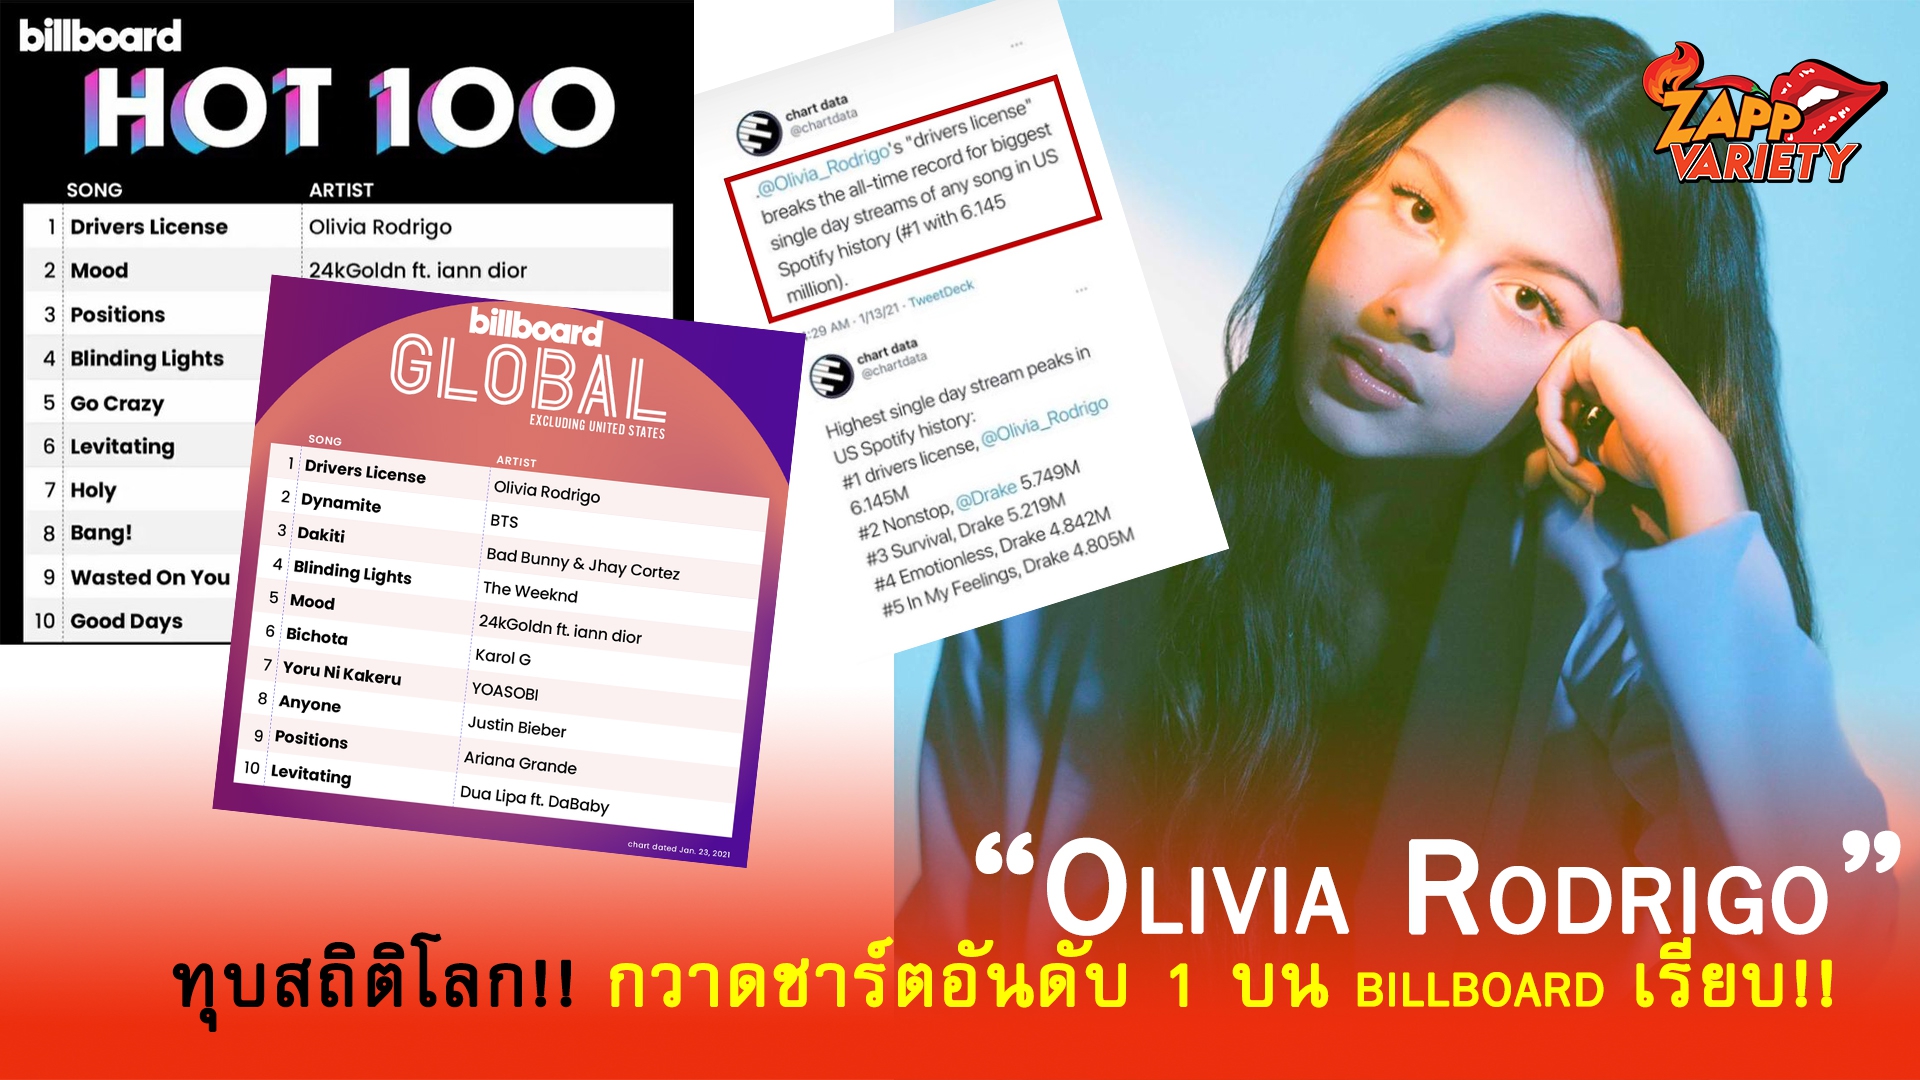  “Olivia Rodrigo” ทุบสถิติโลก กวาดชาร์ตอันดับ 1 บน billboard เรียบ!!